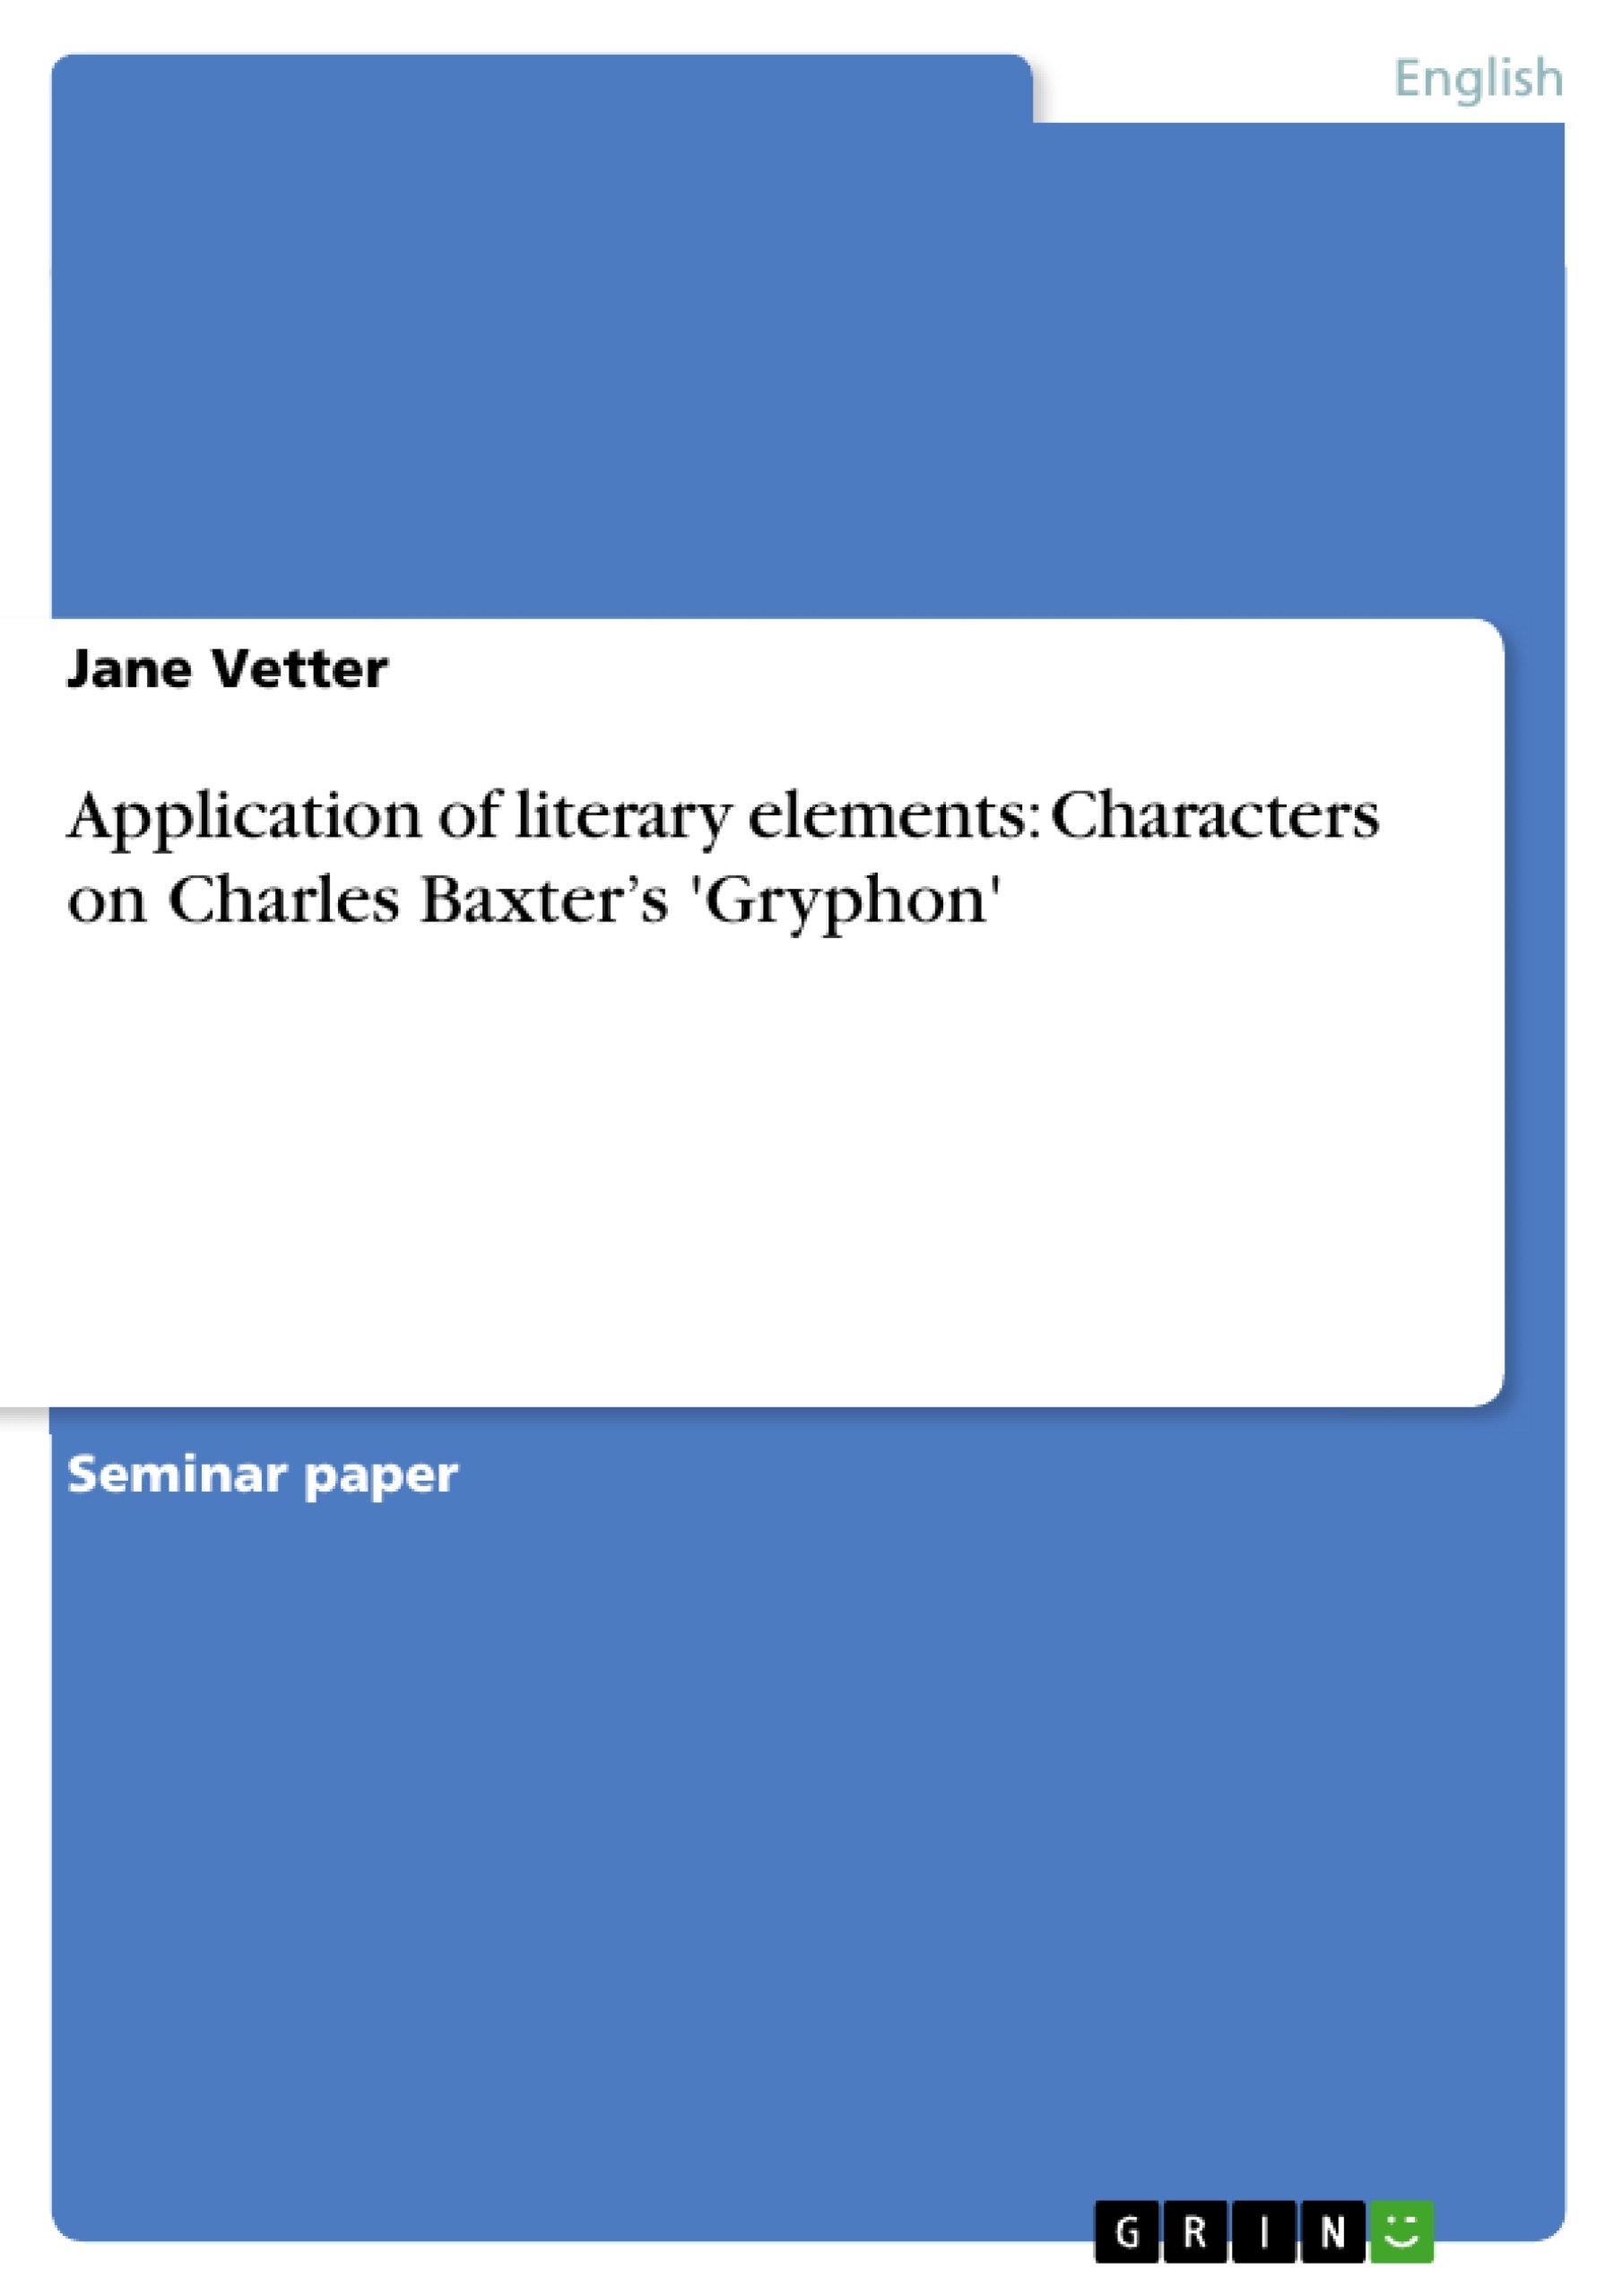 gryphon charles baxter analysis